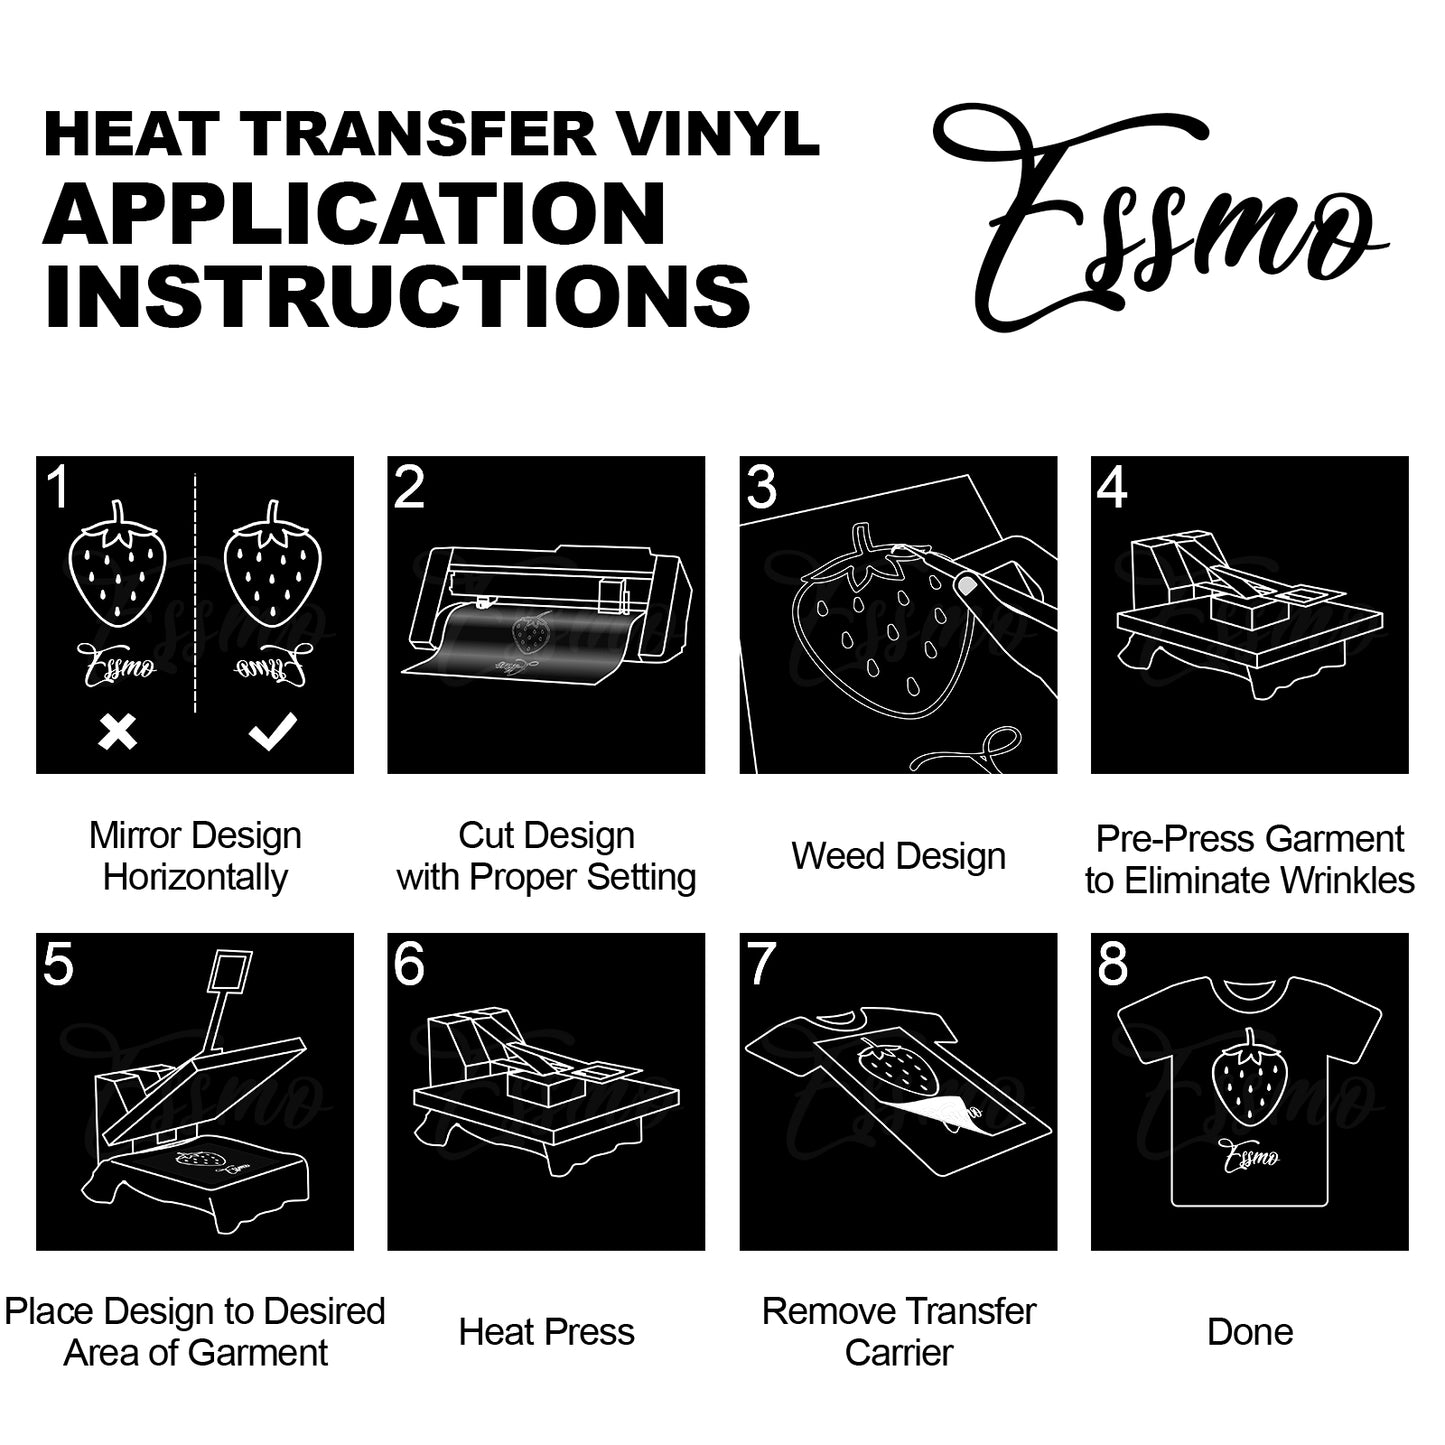 ESSMO™ Yellow Flock Heat Transfer Vinyl HTV DF14